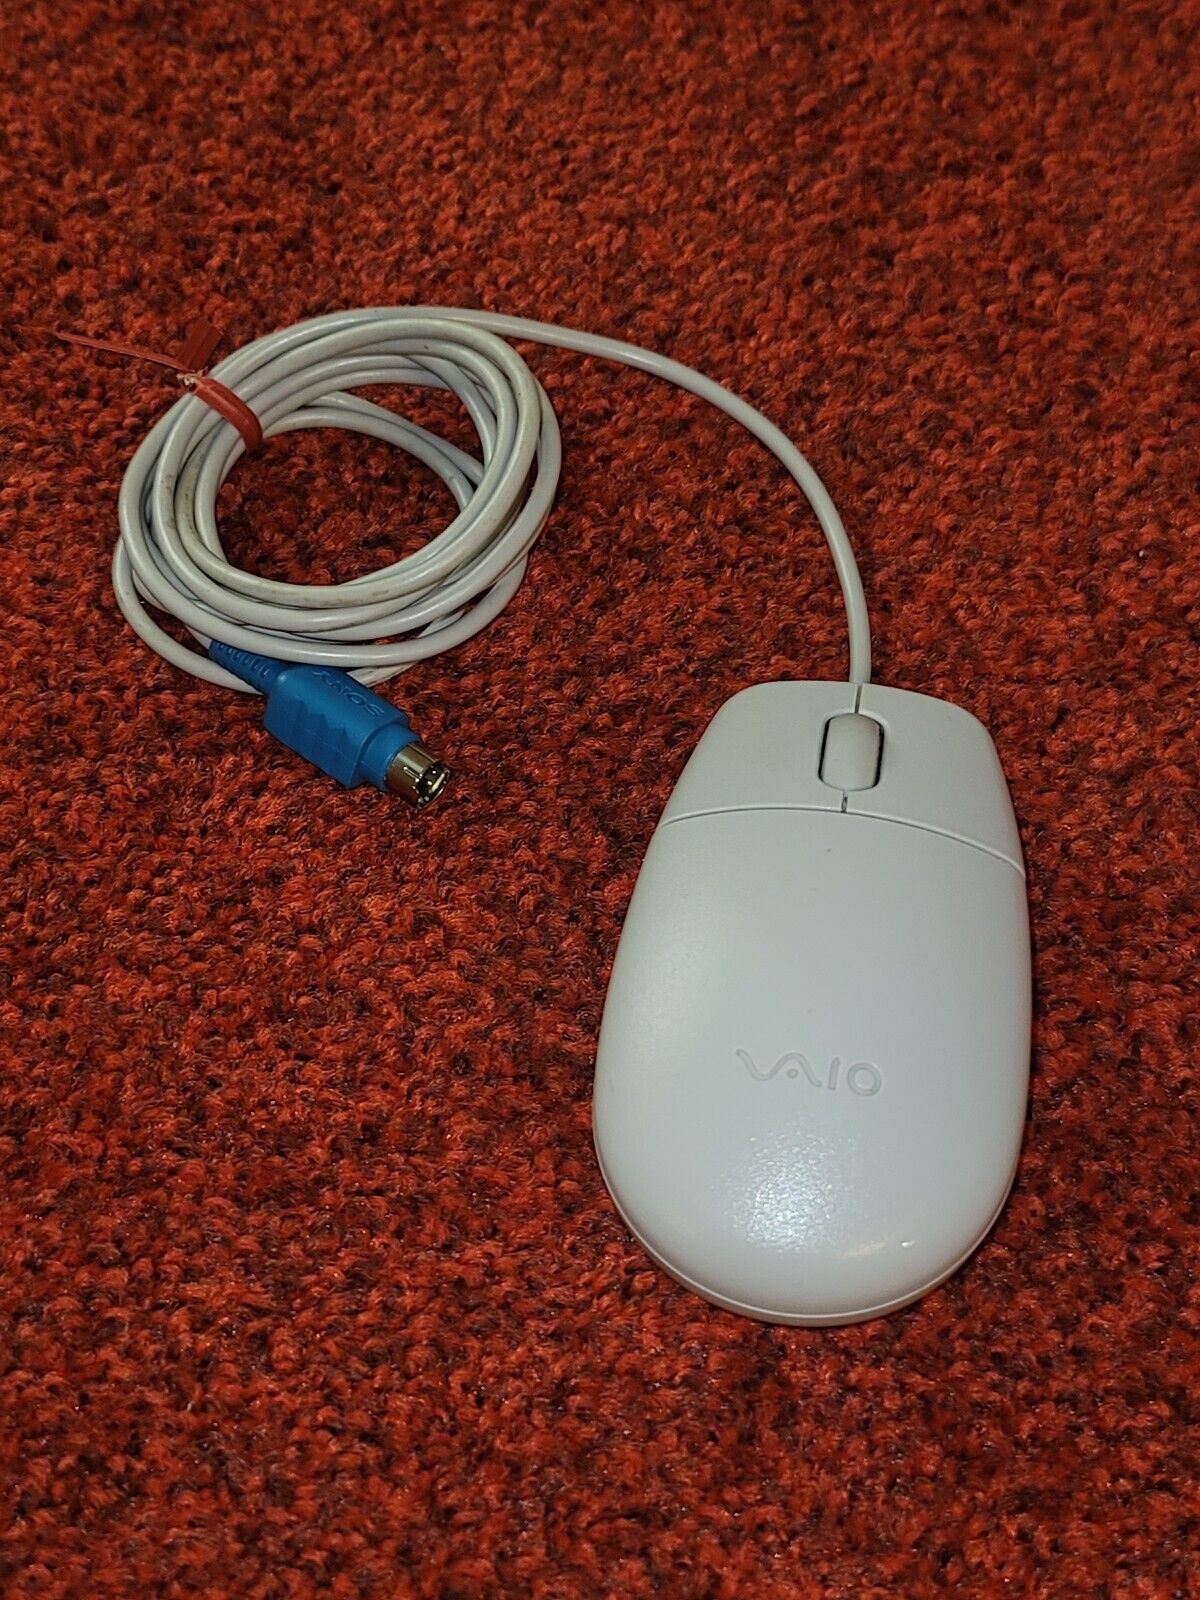 Original SONY Vaio Mouse Model PCVA-MSPB - PS/2 Port - Wired - Vintage